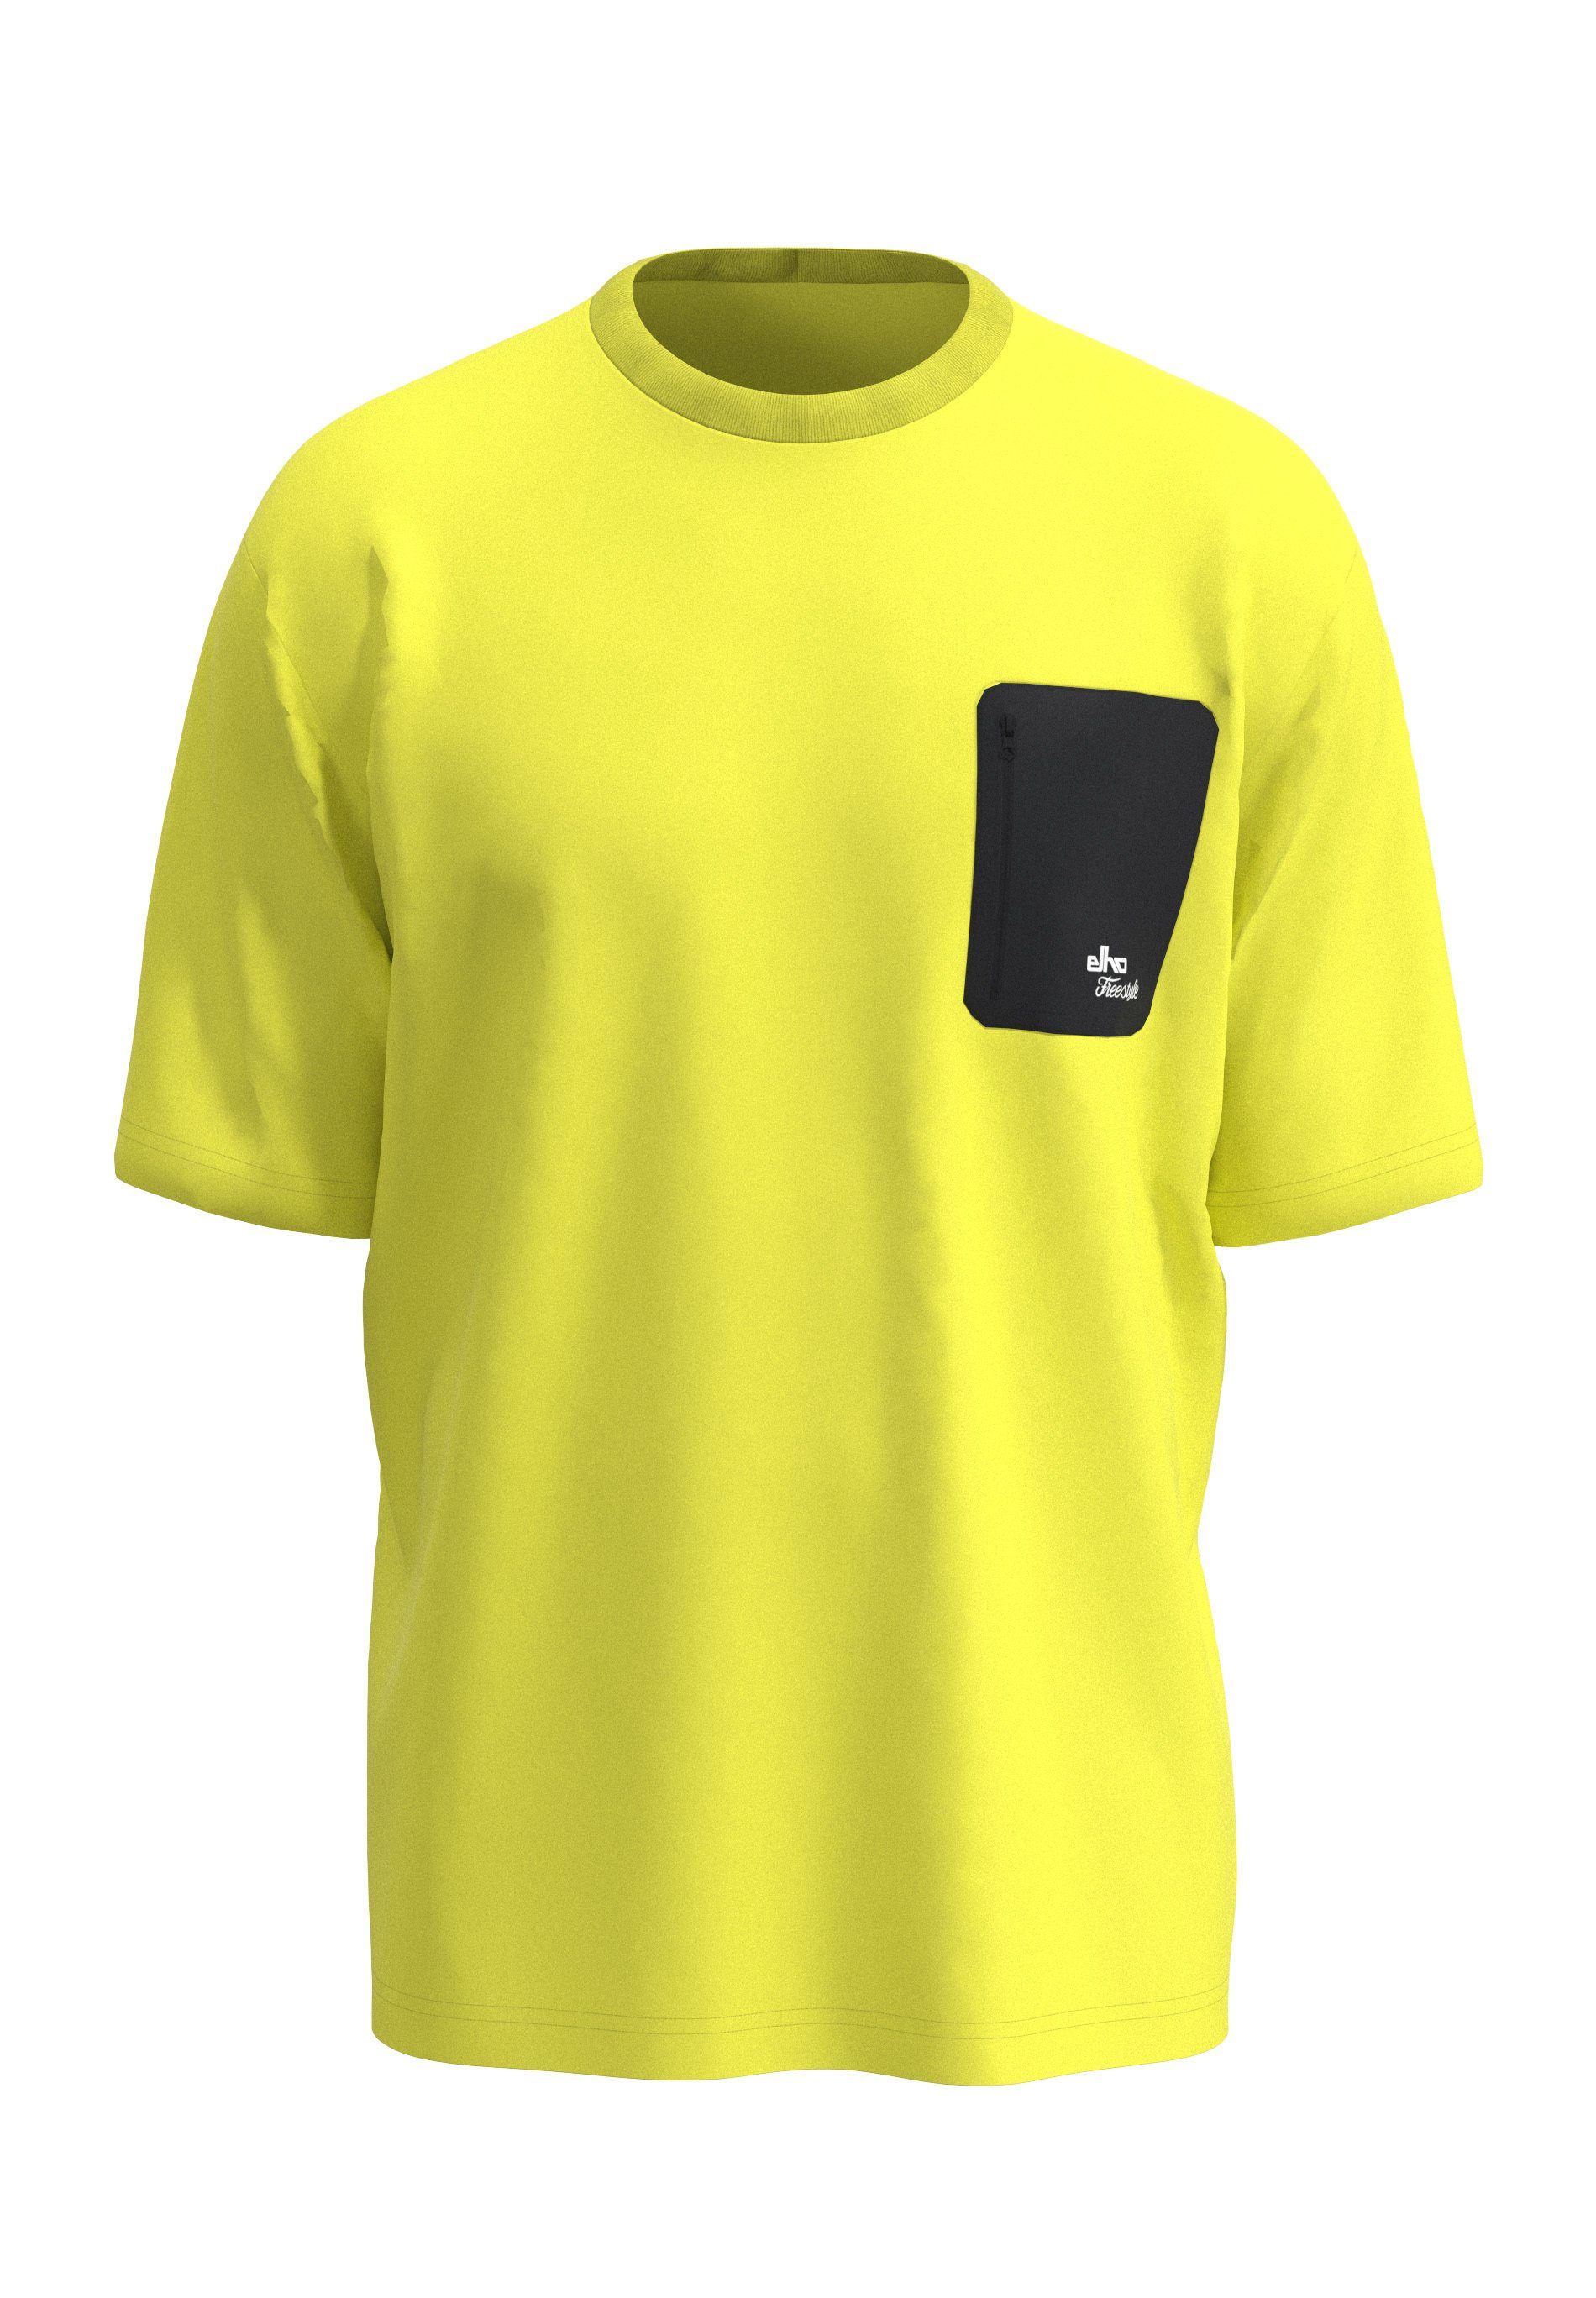 89 AMALFI Elho Yellow T-Shirt